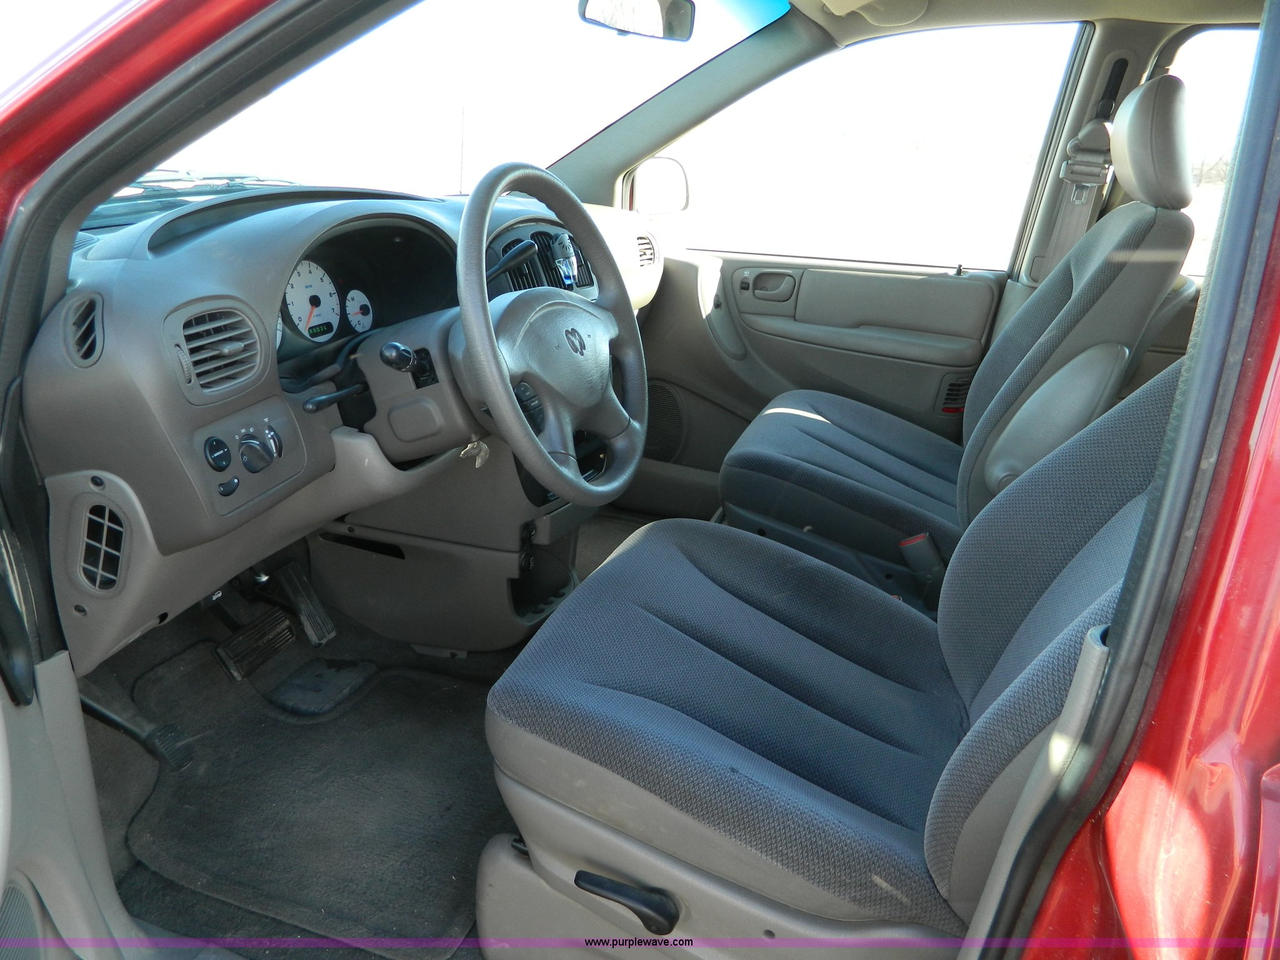 2001 Dodge Caravan SE Interior by CreativeT01 on DeviantArt